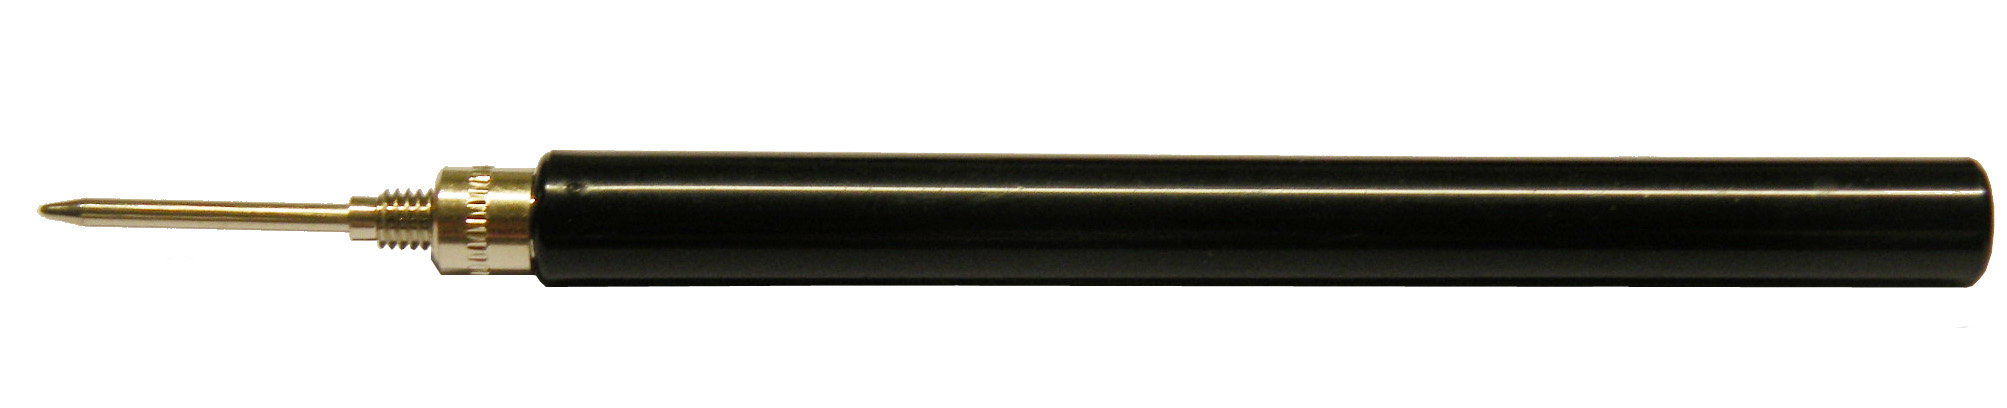 SOLDERLESS PIN TIP PLUG - LONG HANDLE (BLACK)